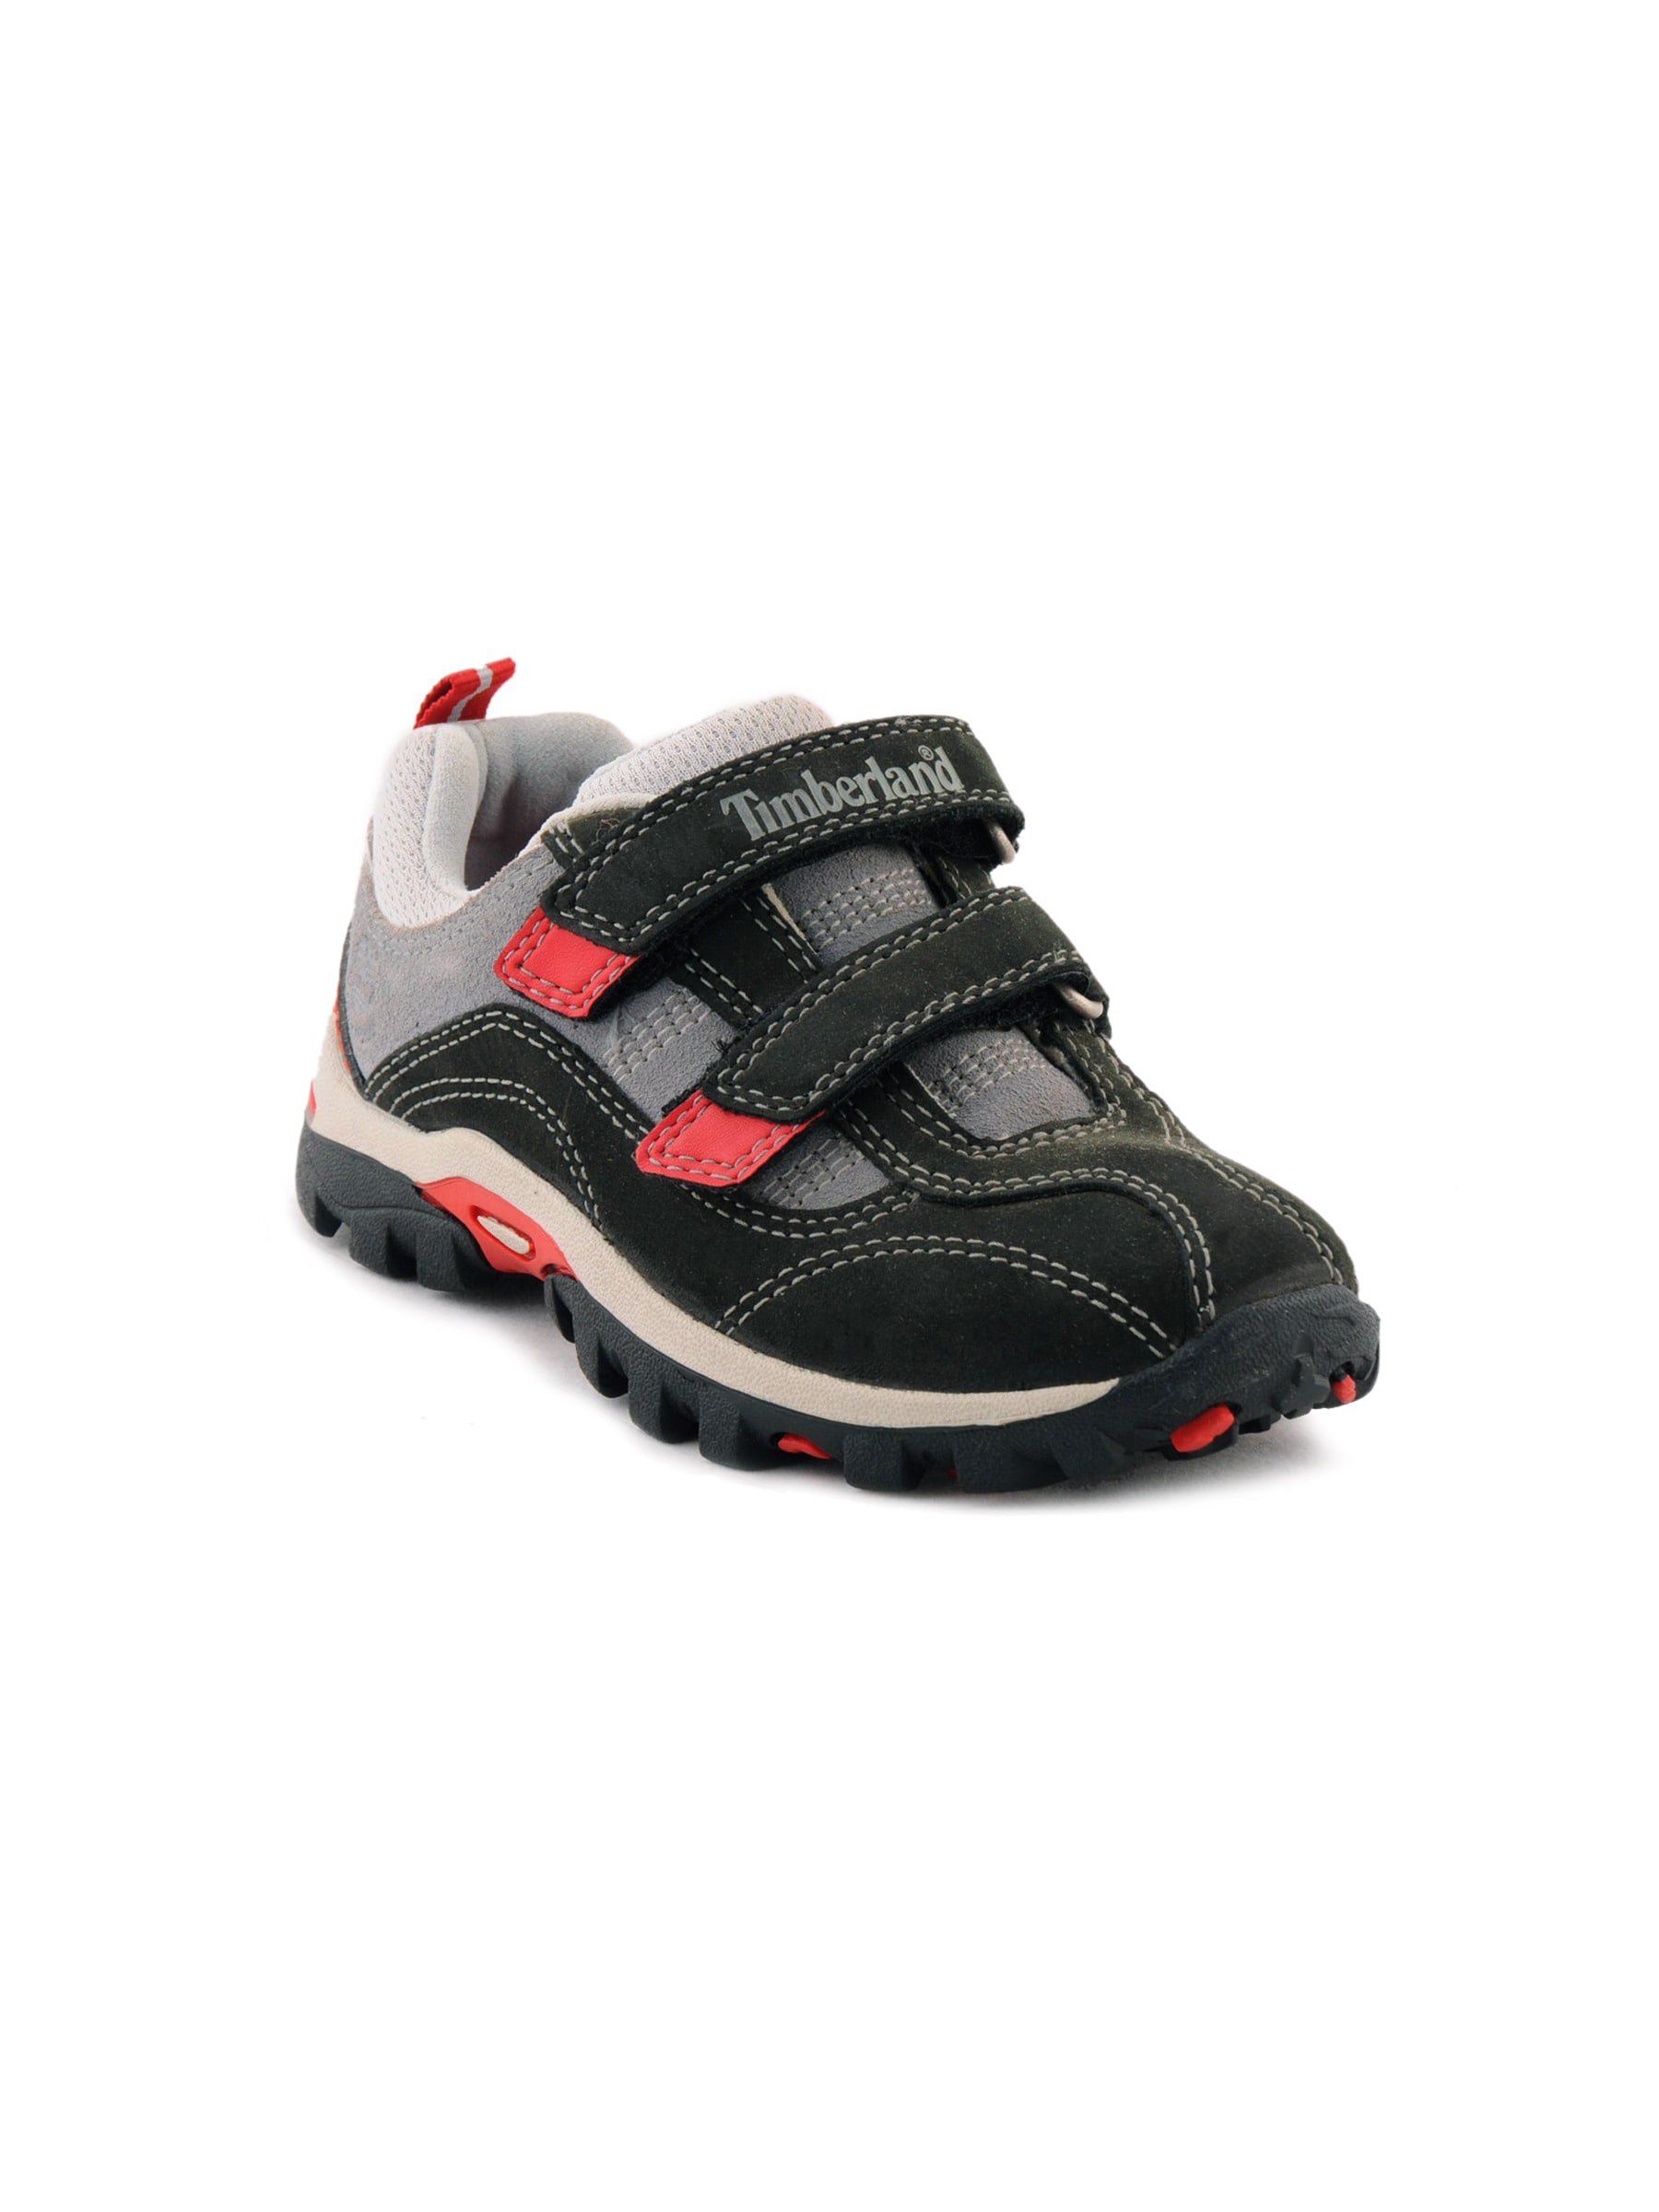 Timberland Men Toddler Black Casual Shoes